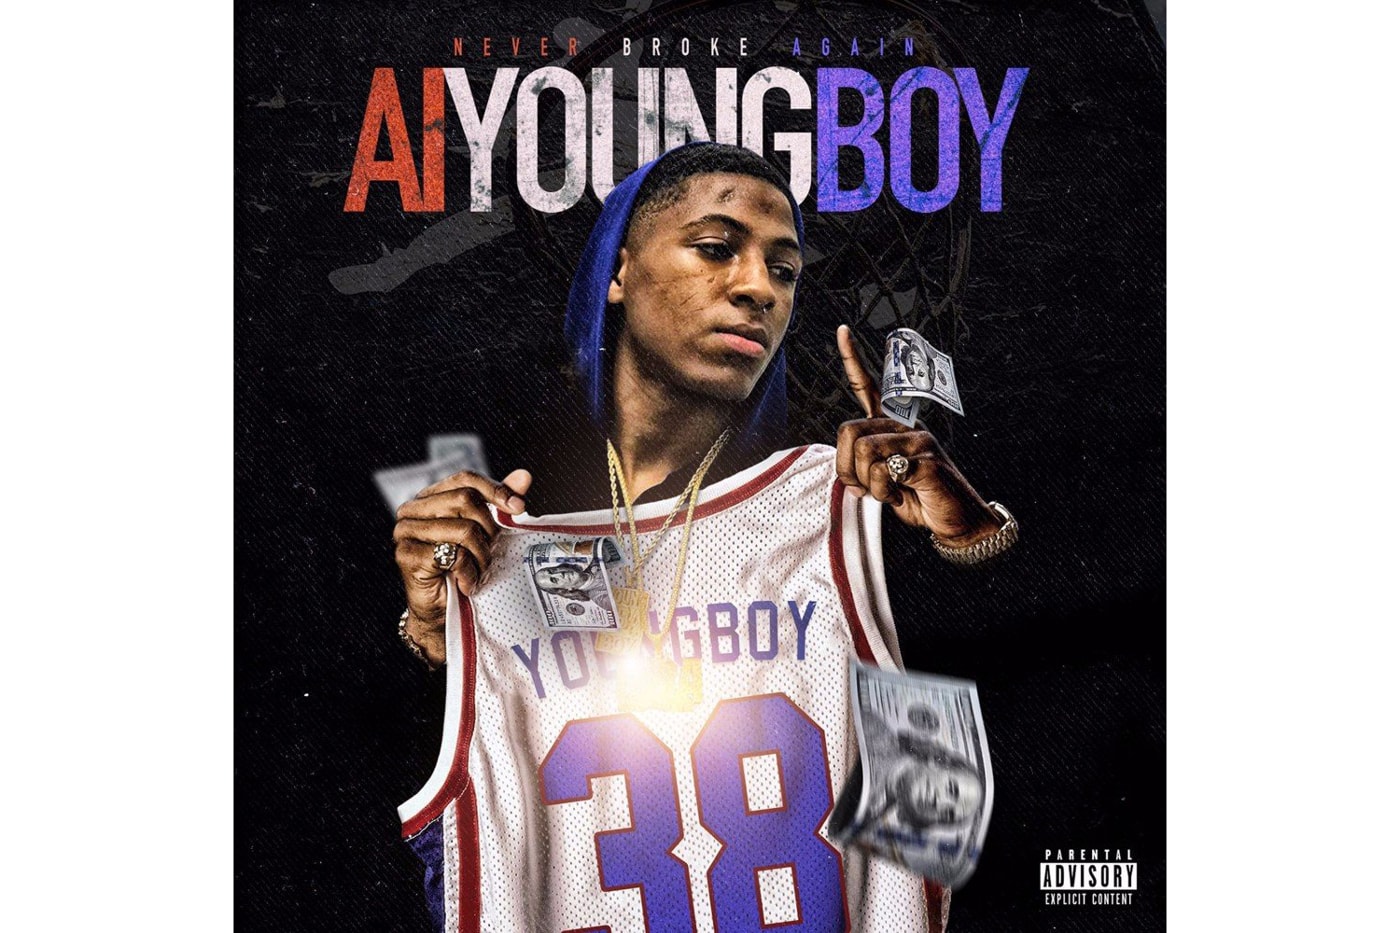 YoungBoy NBA Reveals "A.I. YoungBoy" Tracklist